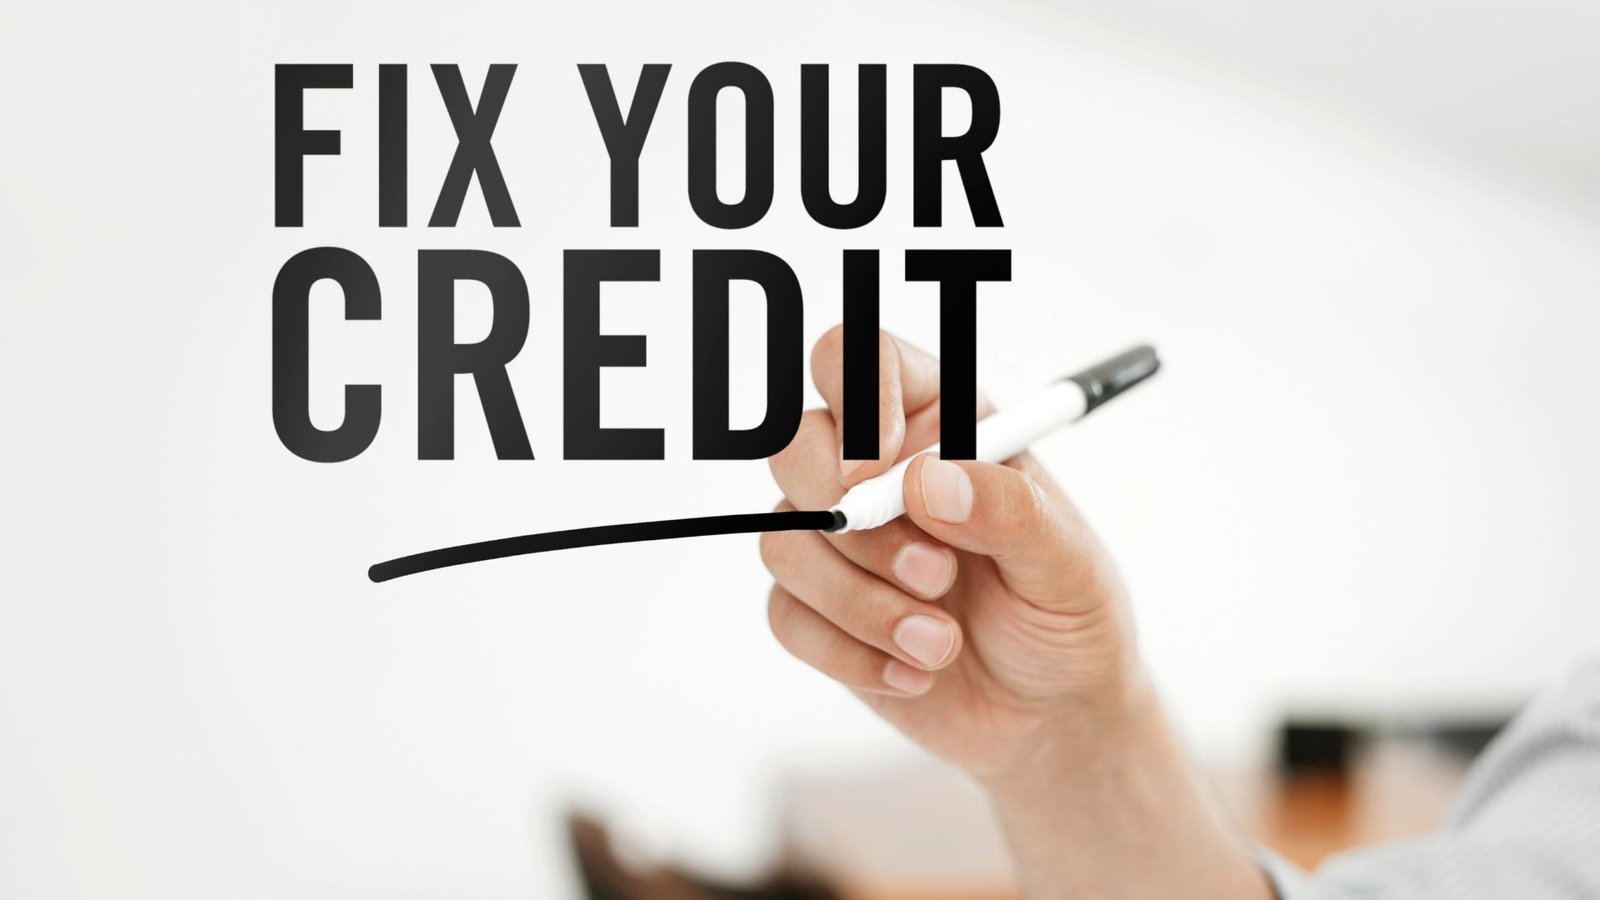 5 ways to improve your credit